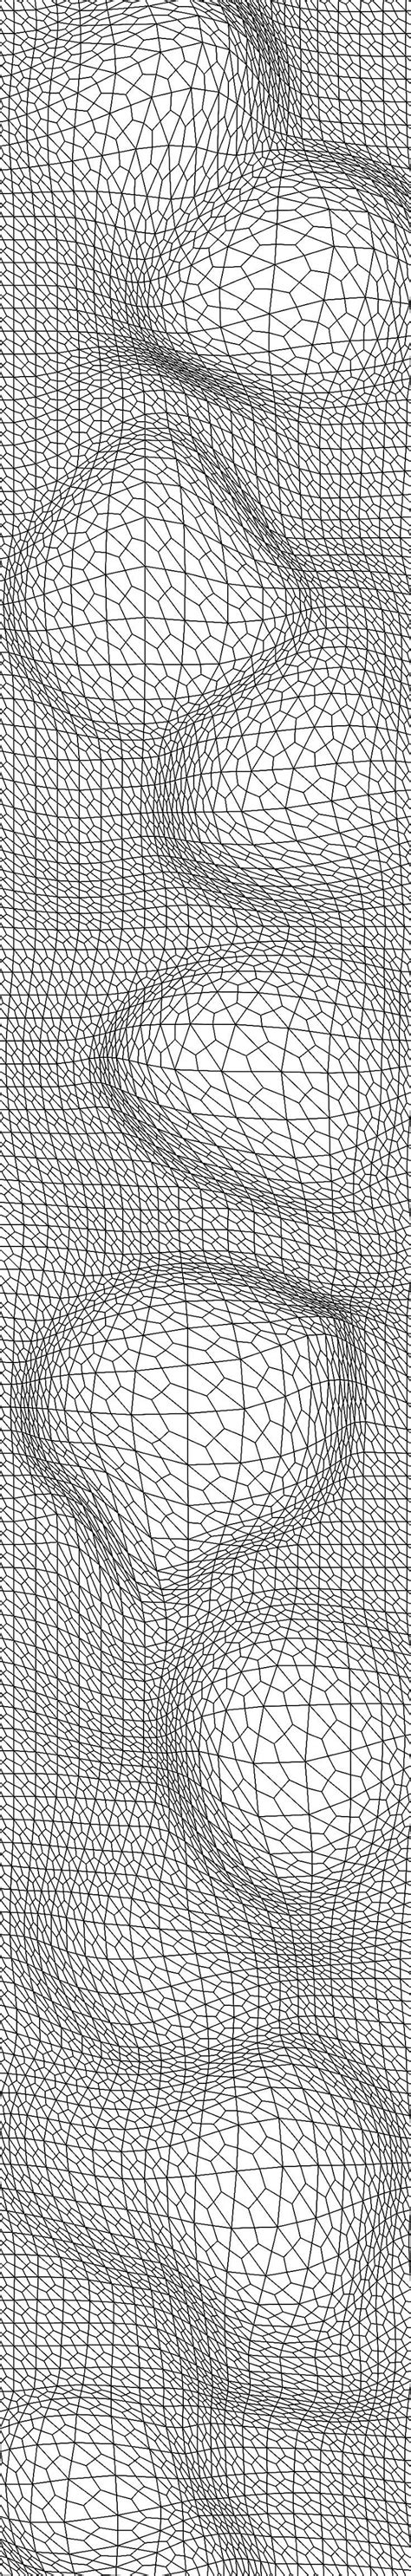 Parametric Pattern Design By Yunus Emre Kara Parametric Design